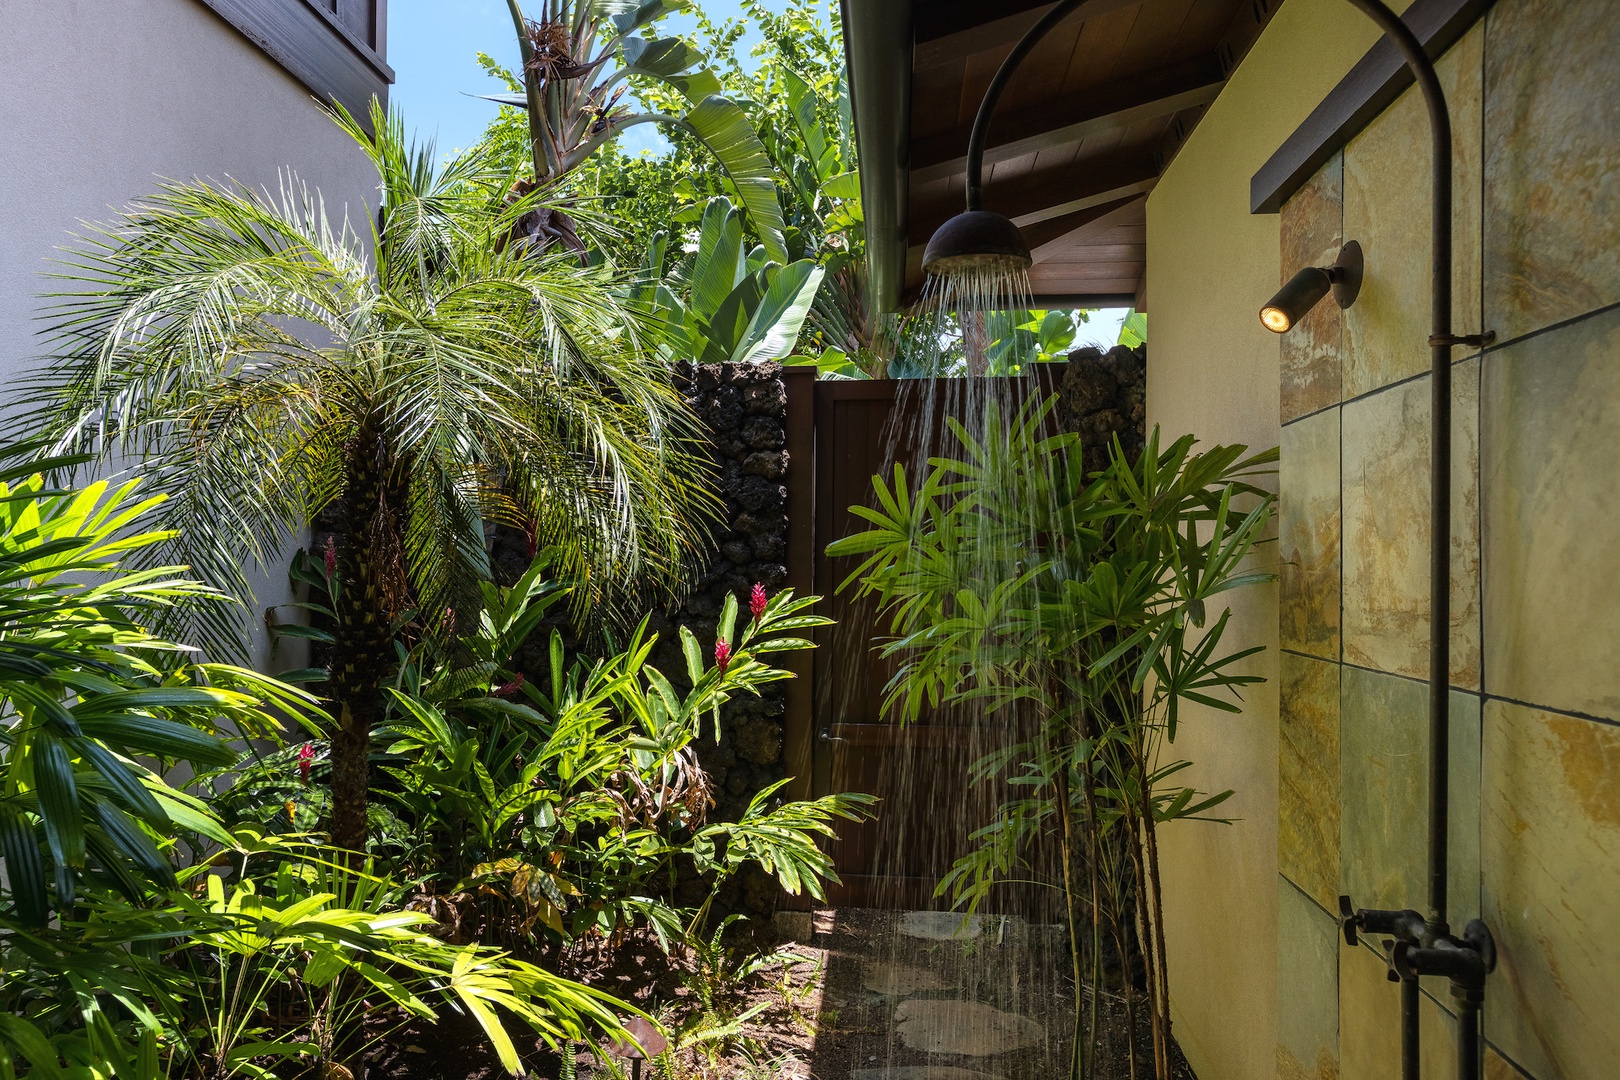 Kailua Kona Vacation Rentals, 3BD Hali'ipua Villa (108) at Four Seasons Resort at Hualalai - Primary bathroom outdoor shower - a tropical treat!